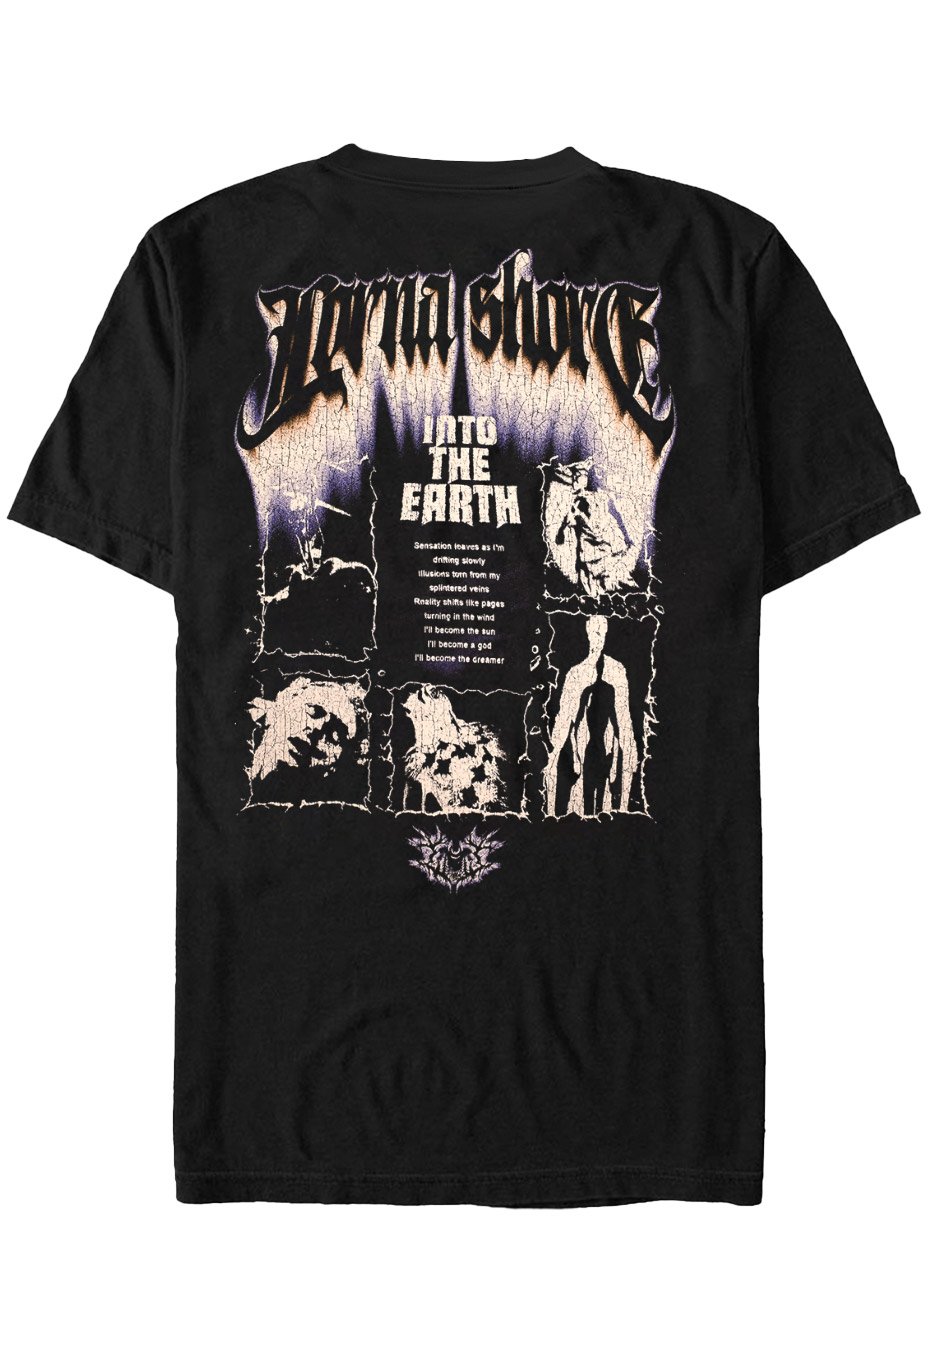 Lorna Shore - Into The Earth - T-Shirt